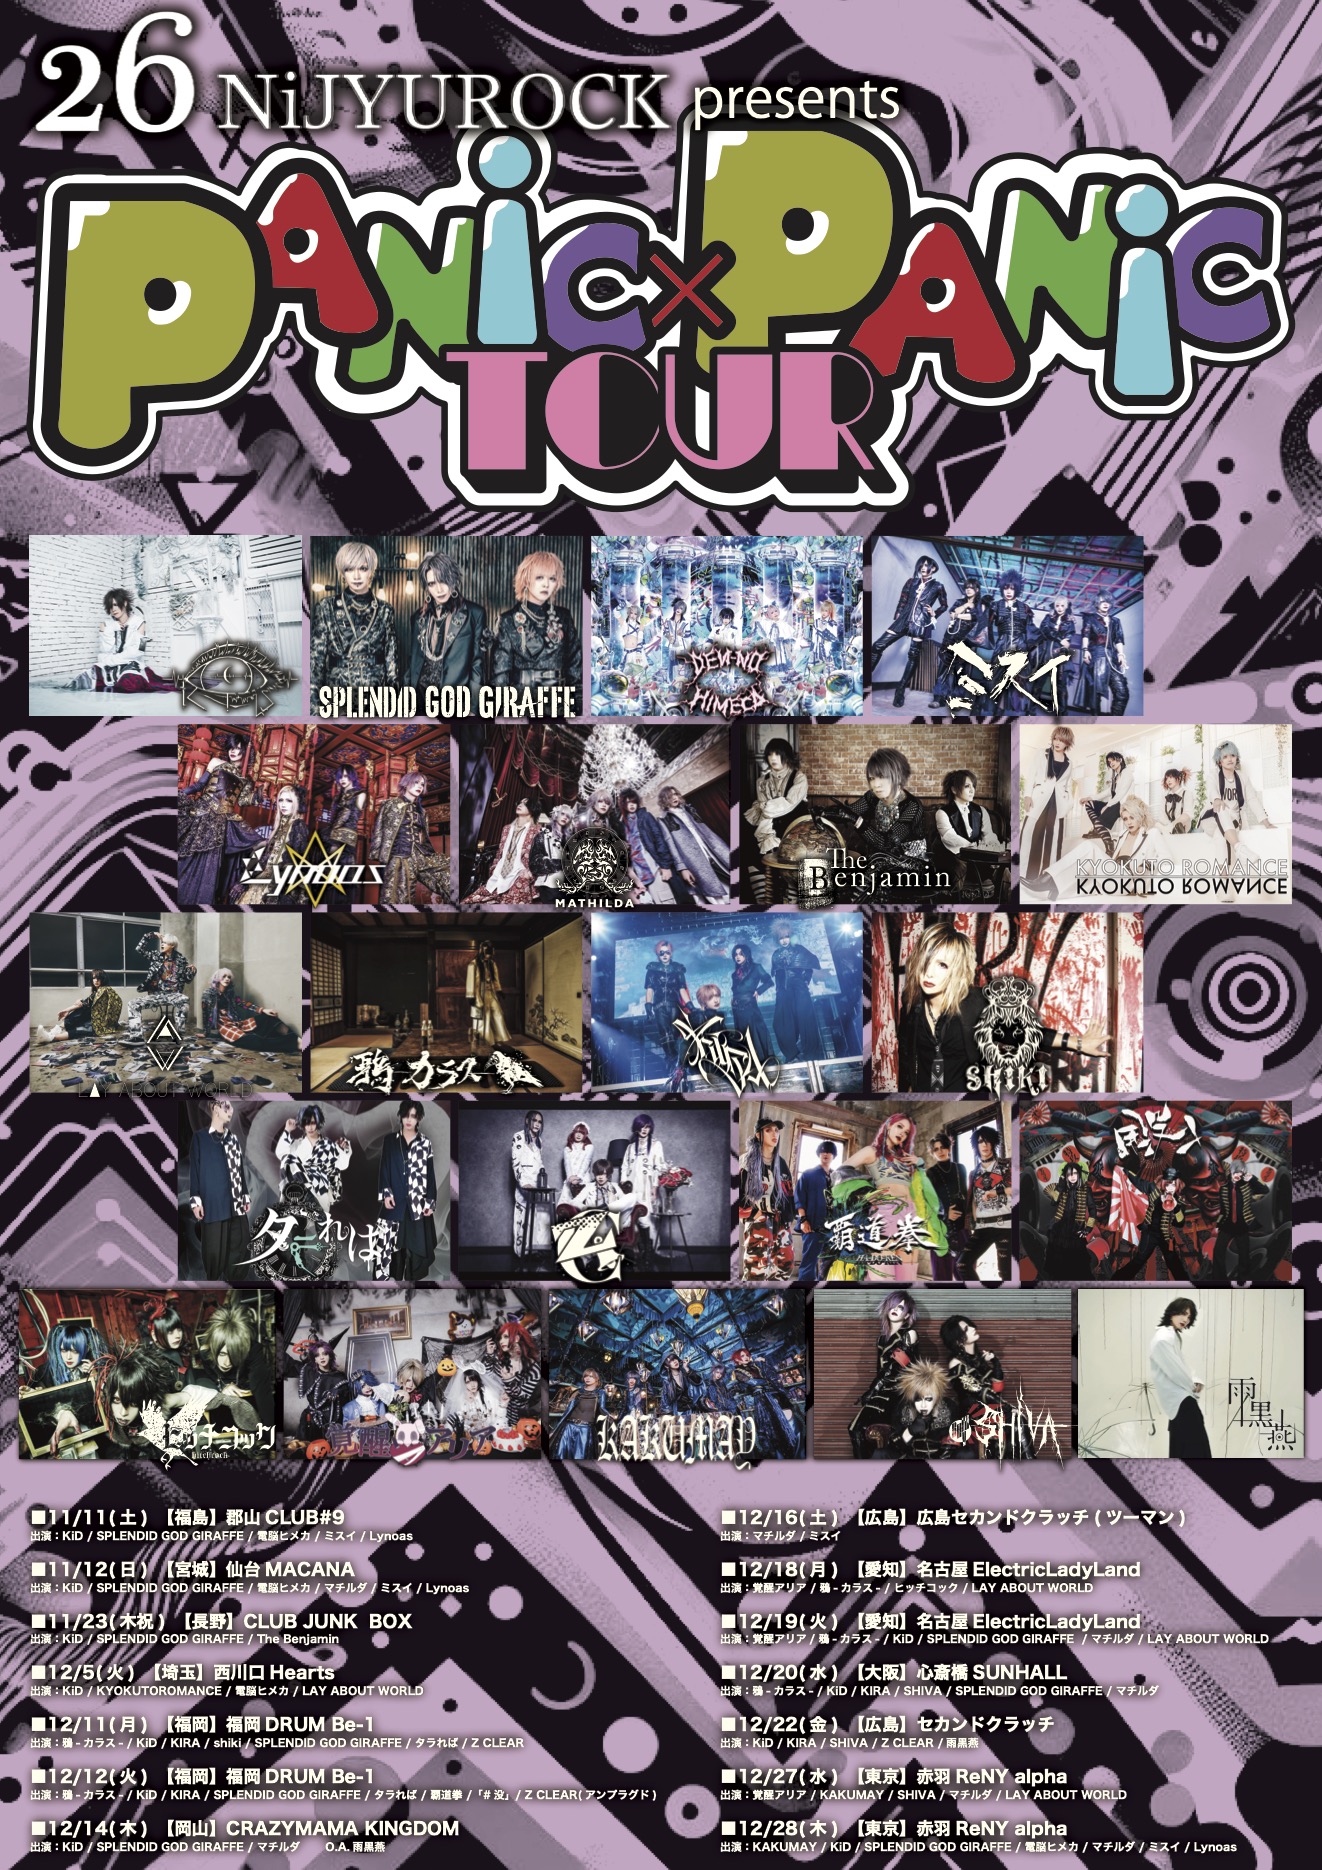 【赤羽12/27】26 NiJYUROCK presents PANiC×PANiC TOUR